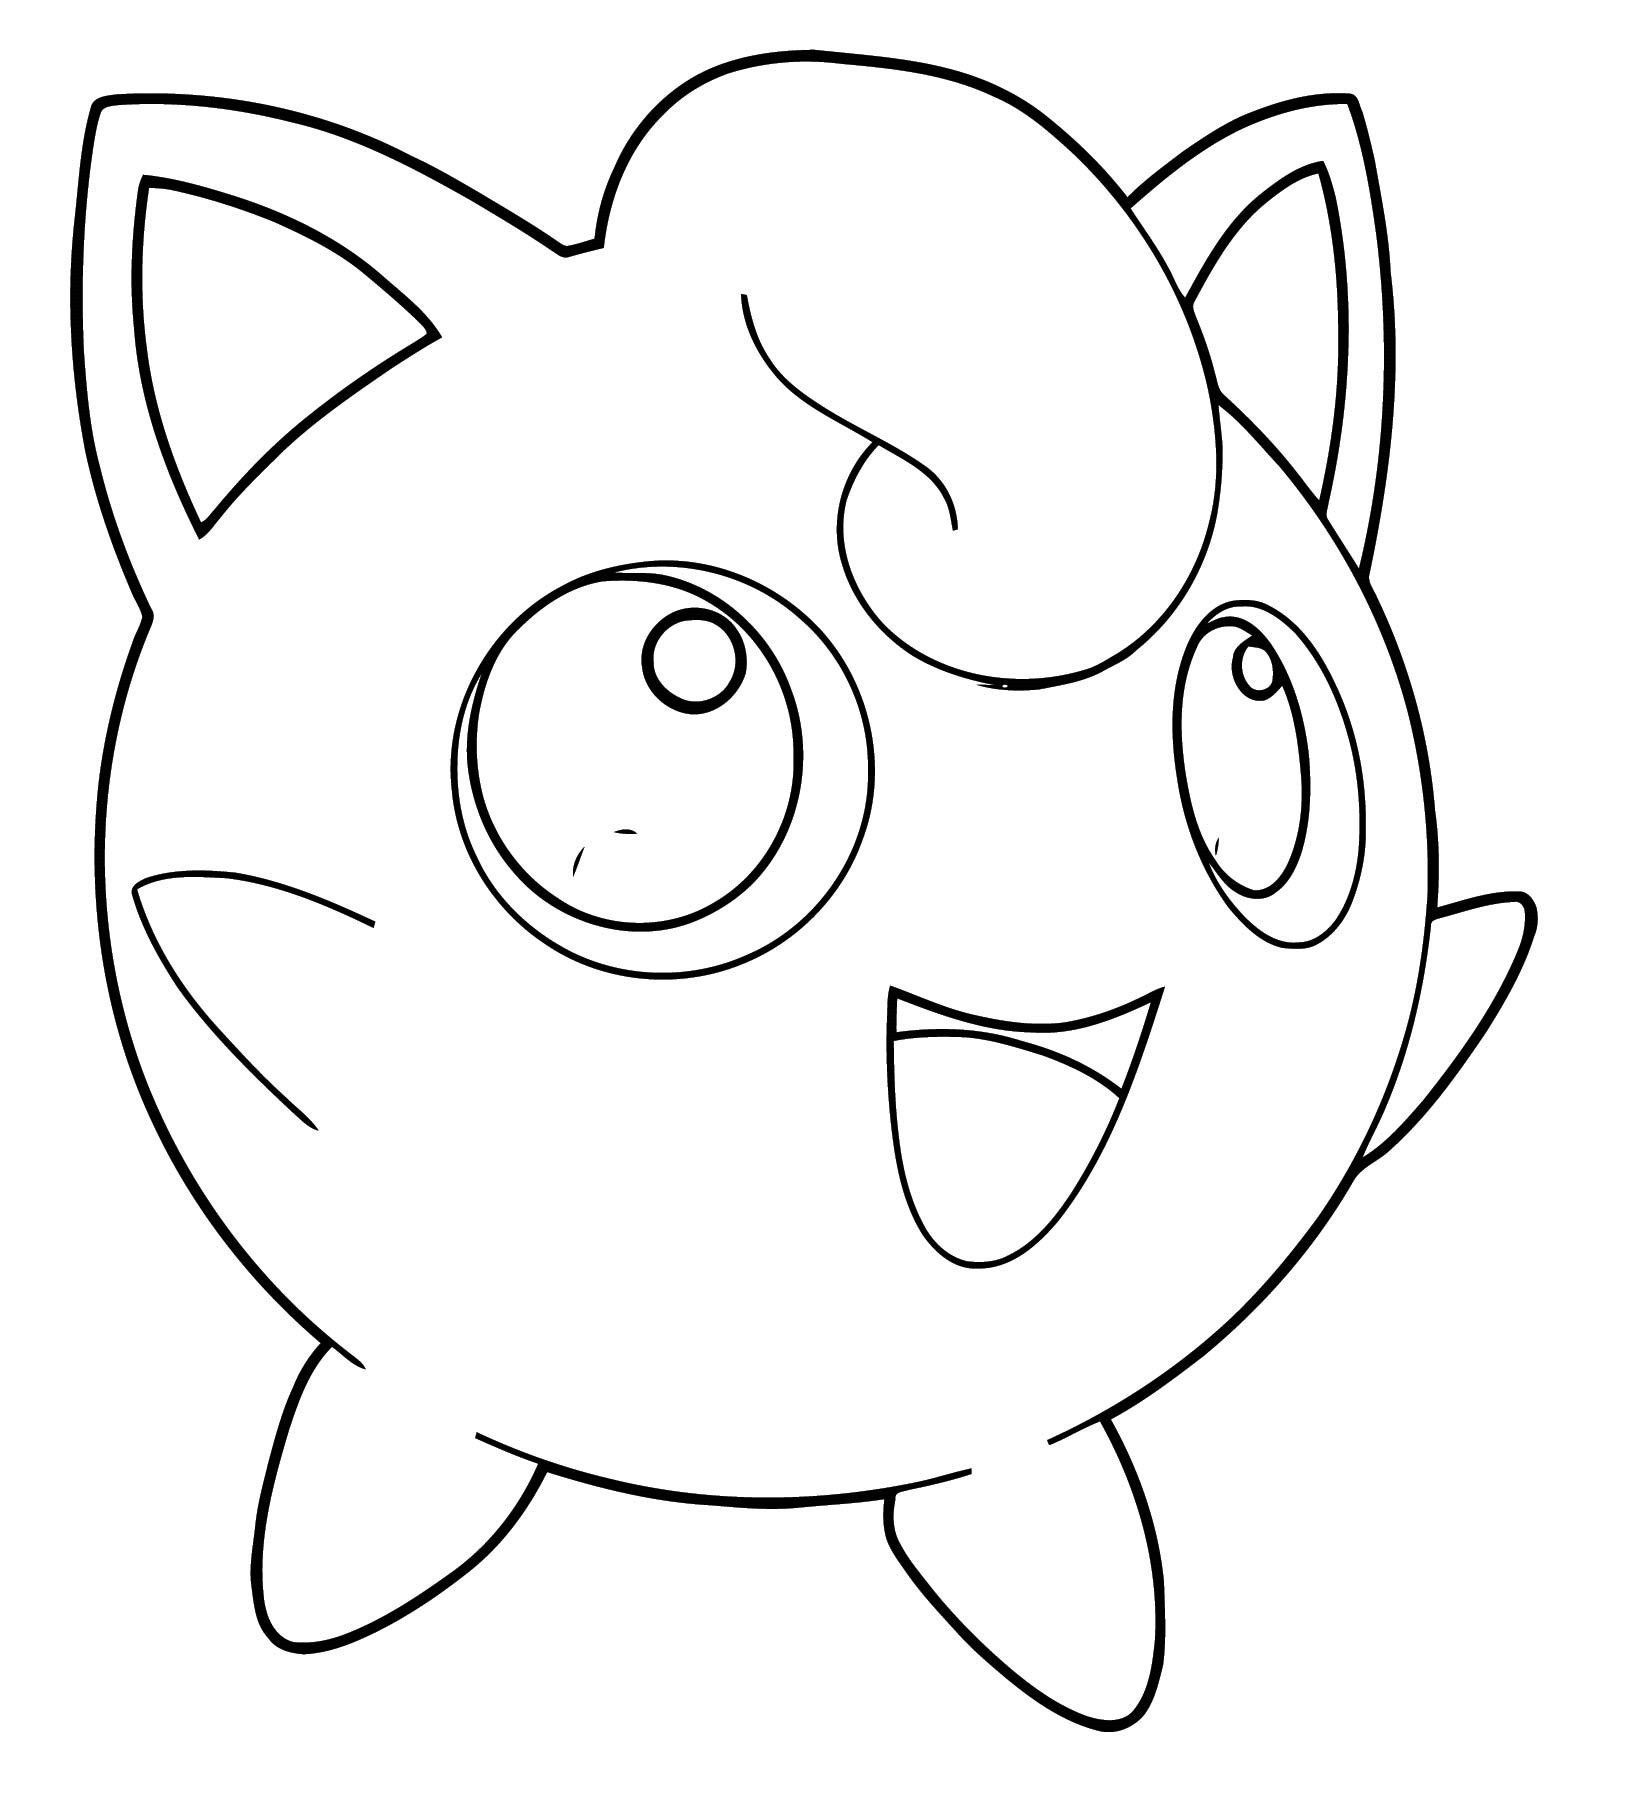 Kawaii pokemon jigglypuff coloring pages pokemon coloring pages cute coloring pages pokemon jigglypuff